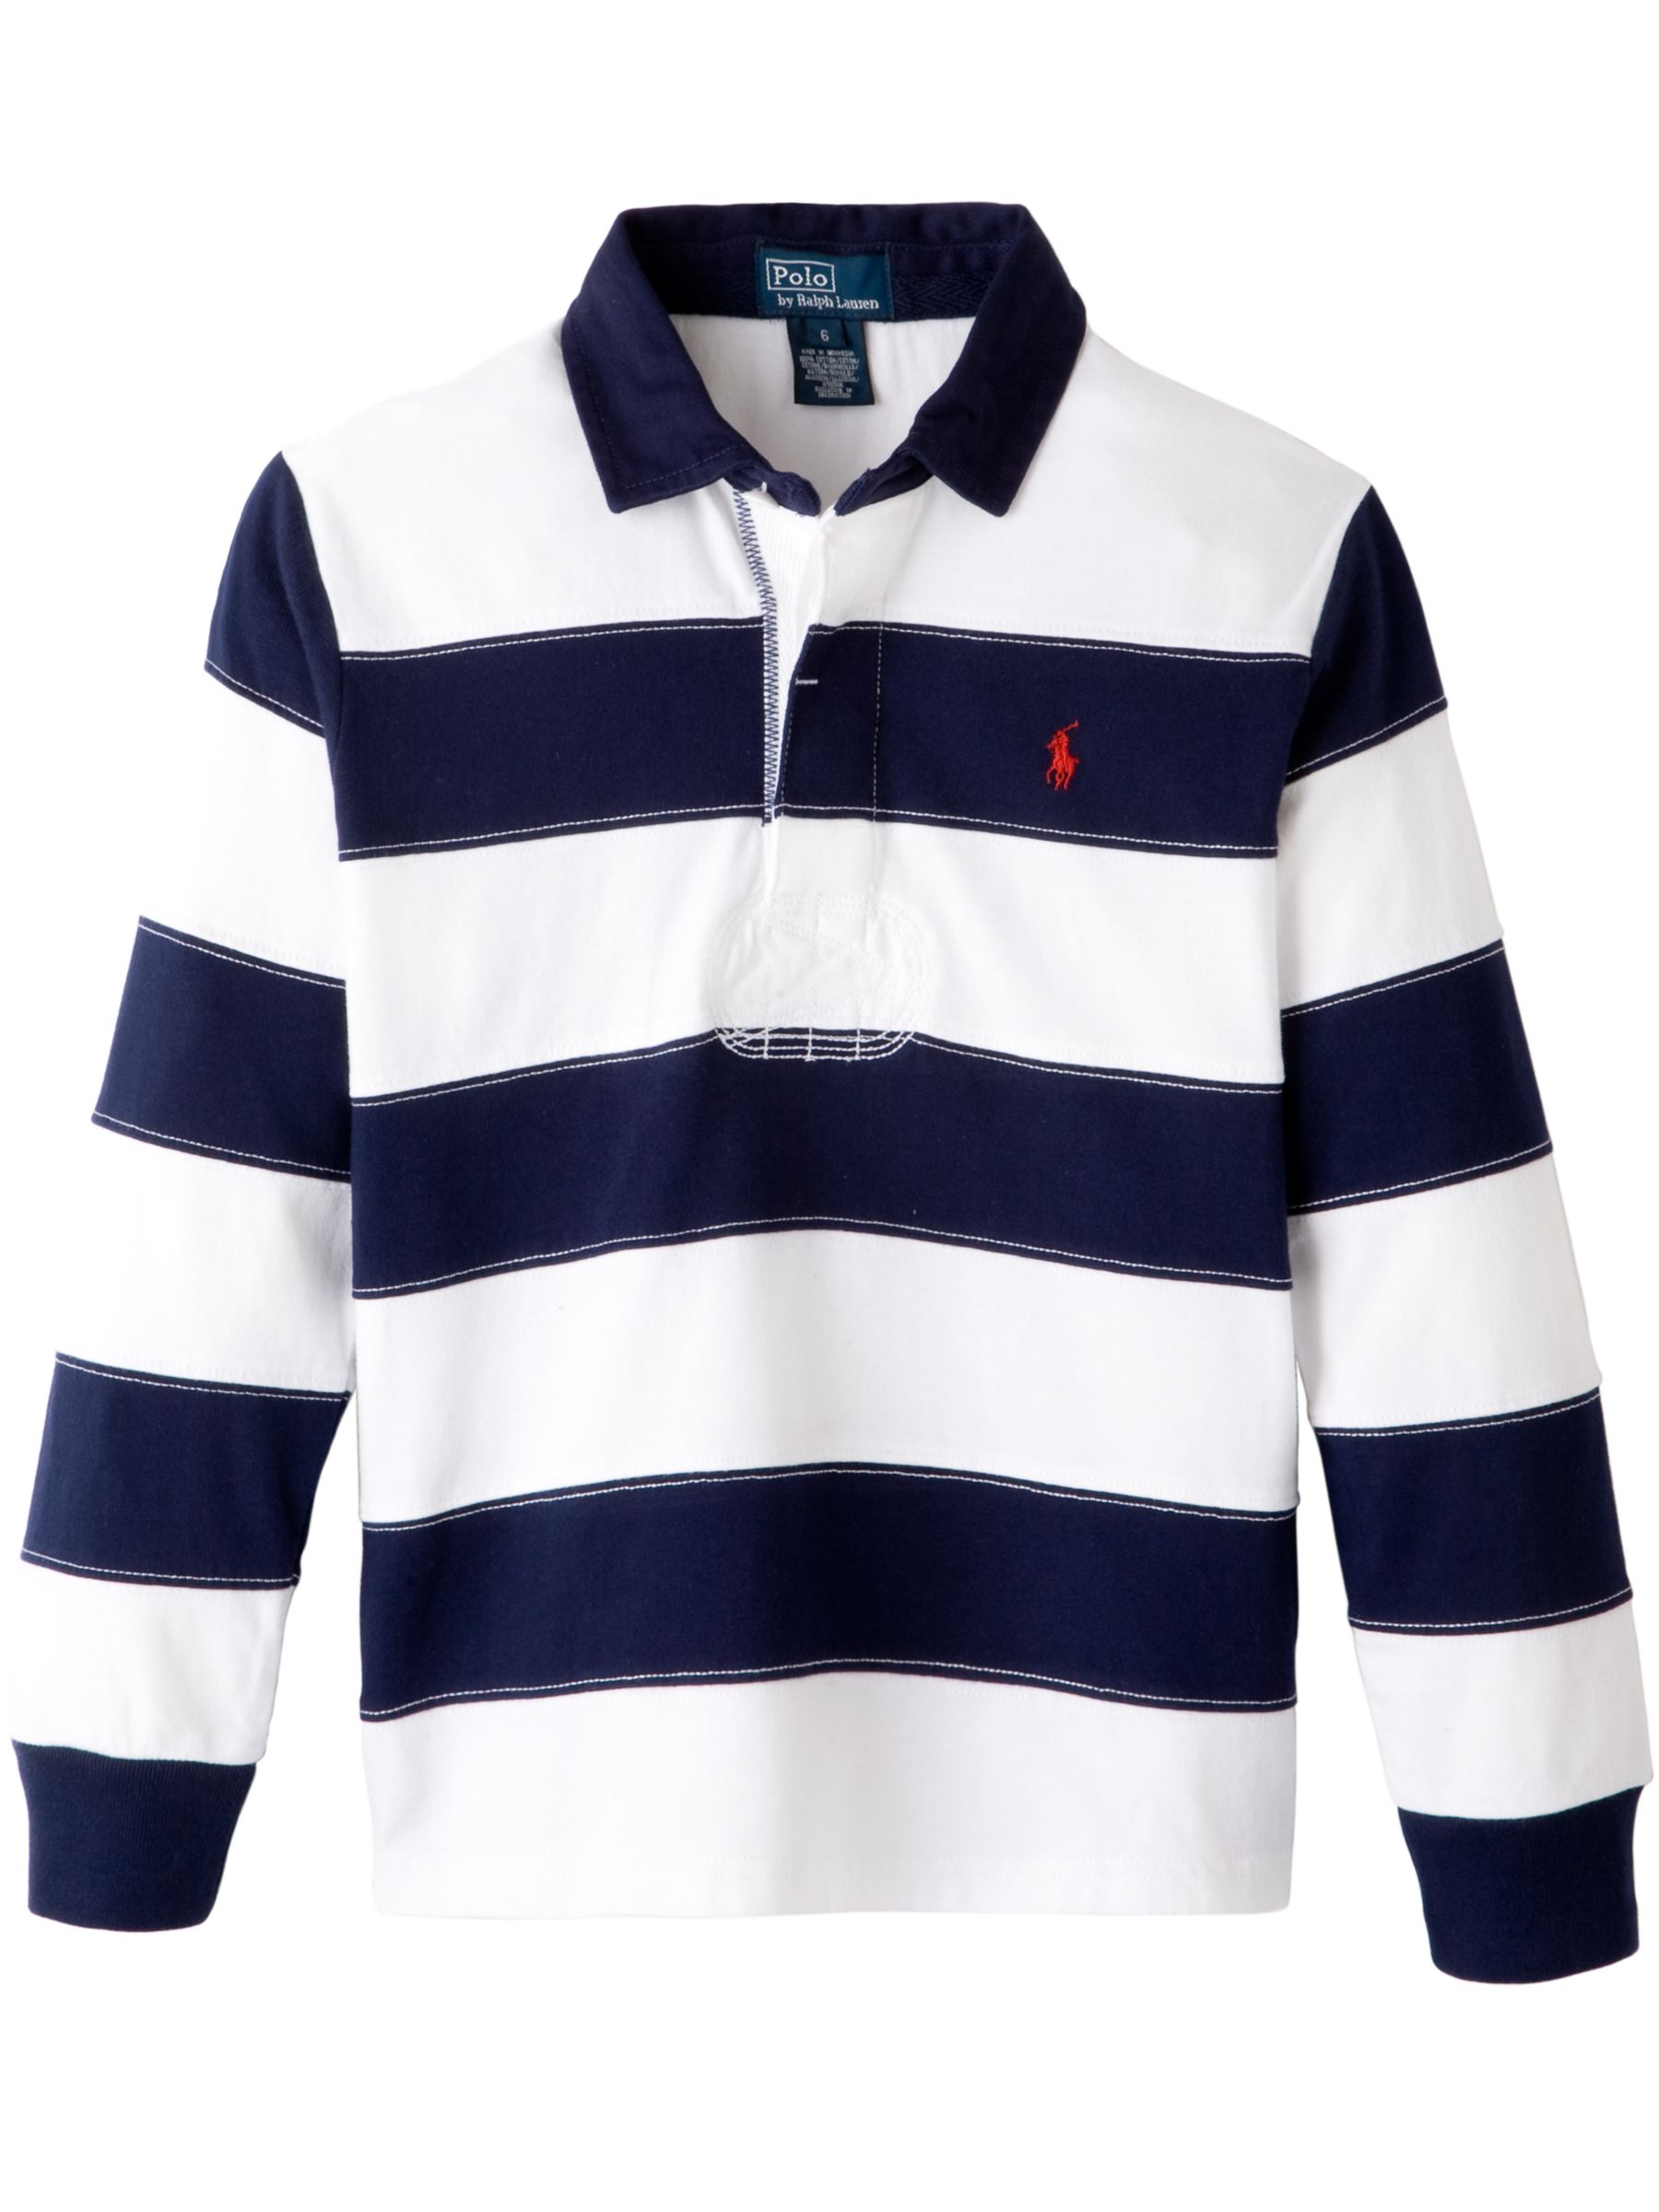 Polo Ralph Lauren Rugby Shirt, Blue / White,